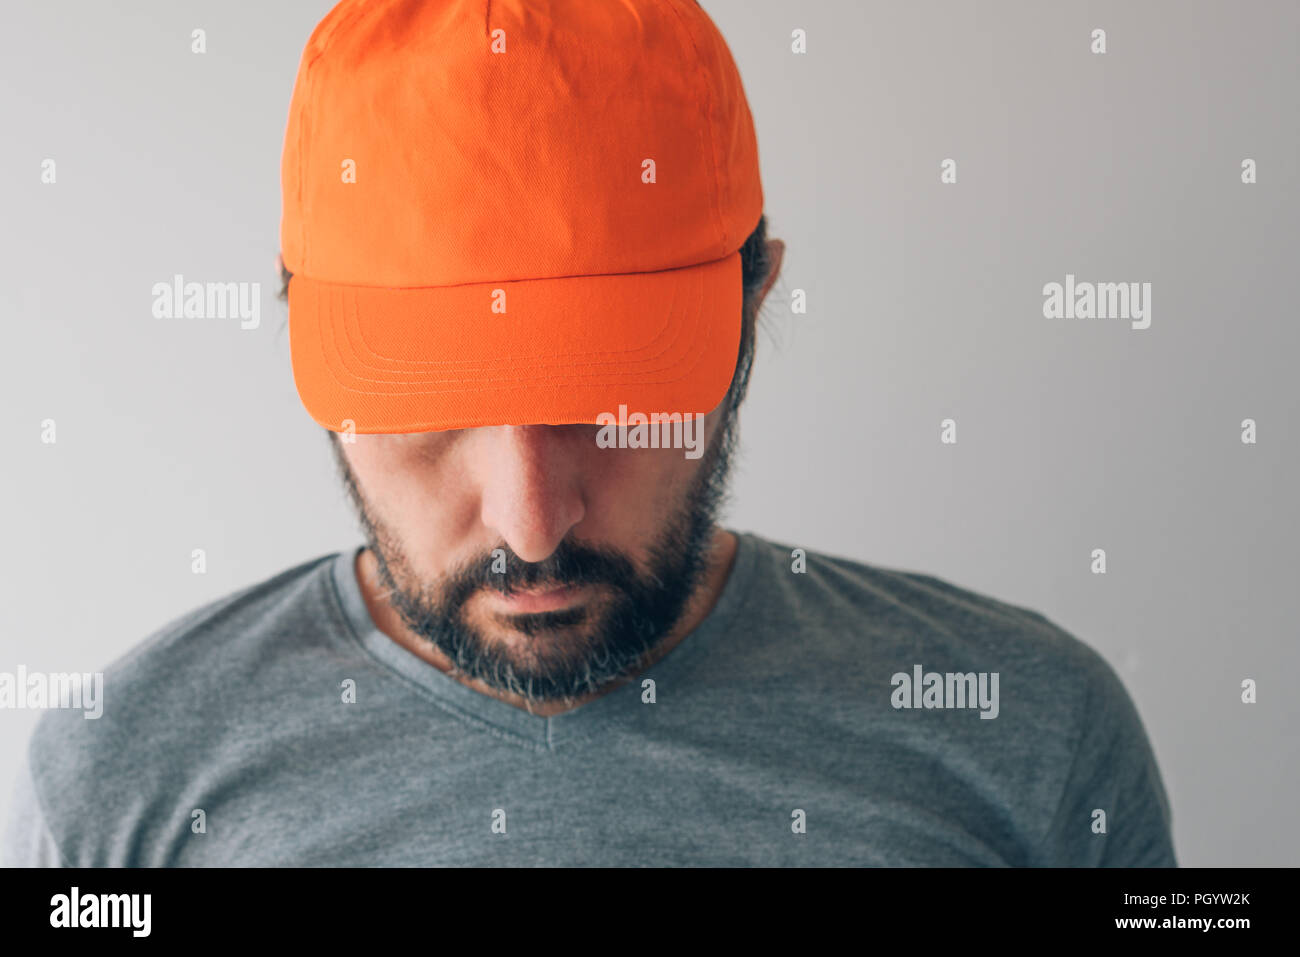 Man wearing orange baseball cap for mockup text or graphics design Stock Photo